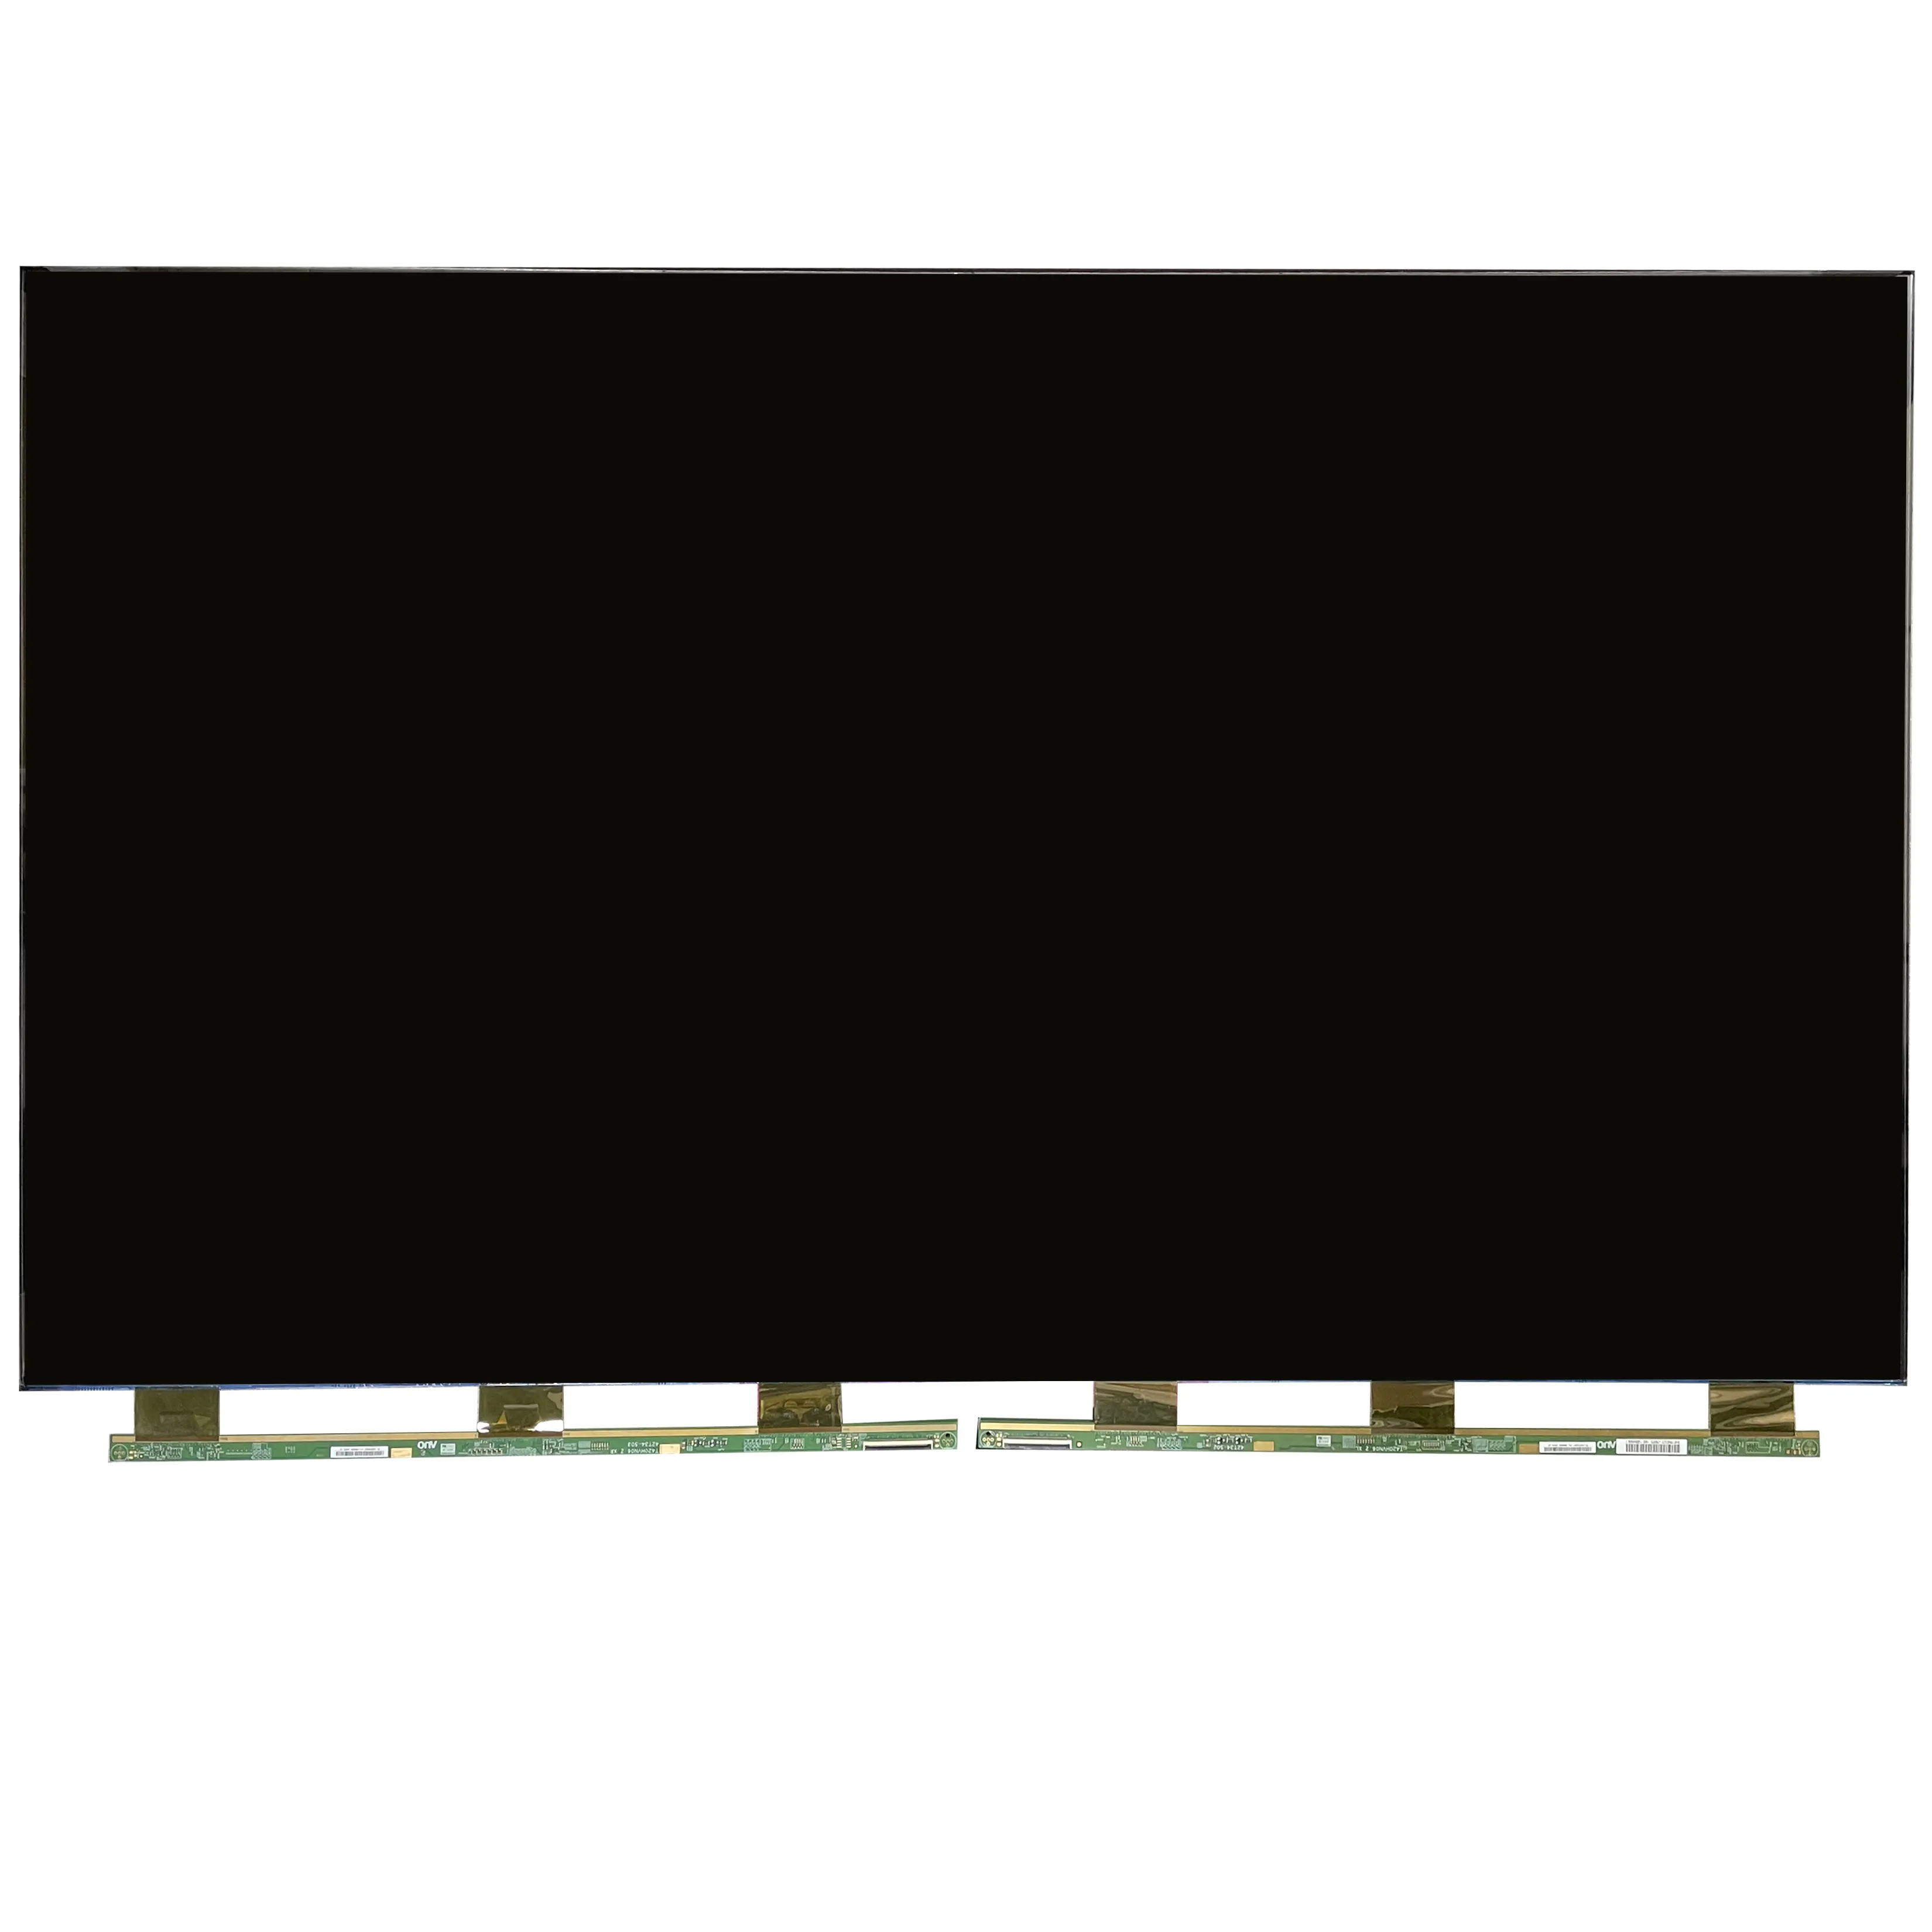 T420HVN06.1 Pantalla LED LCD plana de 42 pulgadas Reemplazo de repuesto para Samsung/LG/SONY